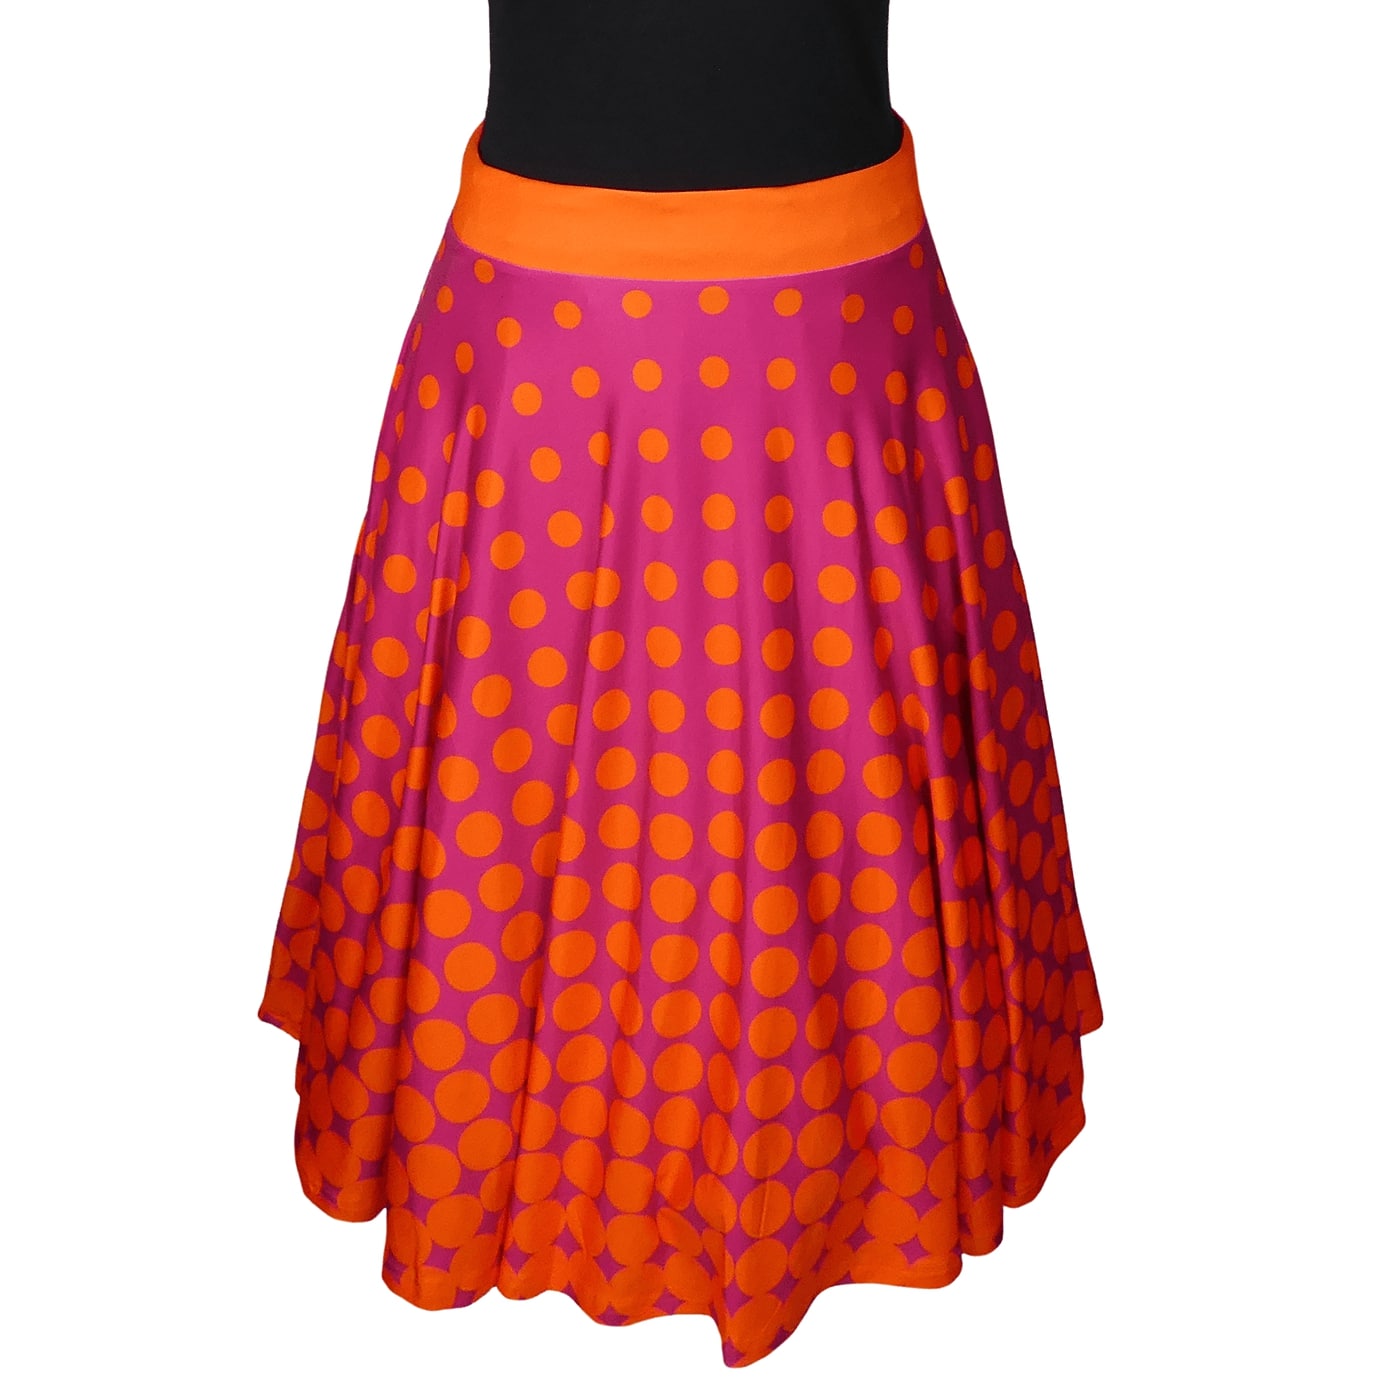 Sunrise Swishy Skirt by RainbowsAndFairies.com.au (Orange & Purple - Polka Dots - Psychedelic - Rockabilly - Circle Skirt With Pockets - Mod Retro) - SKU: CL_SWISH_SUNRS_ORG - Pic-01